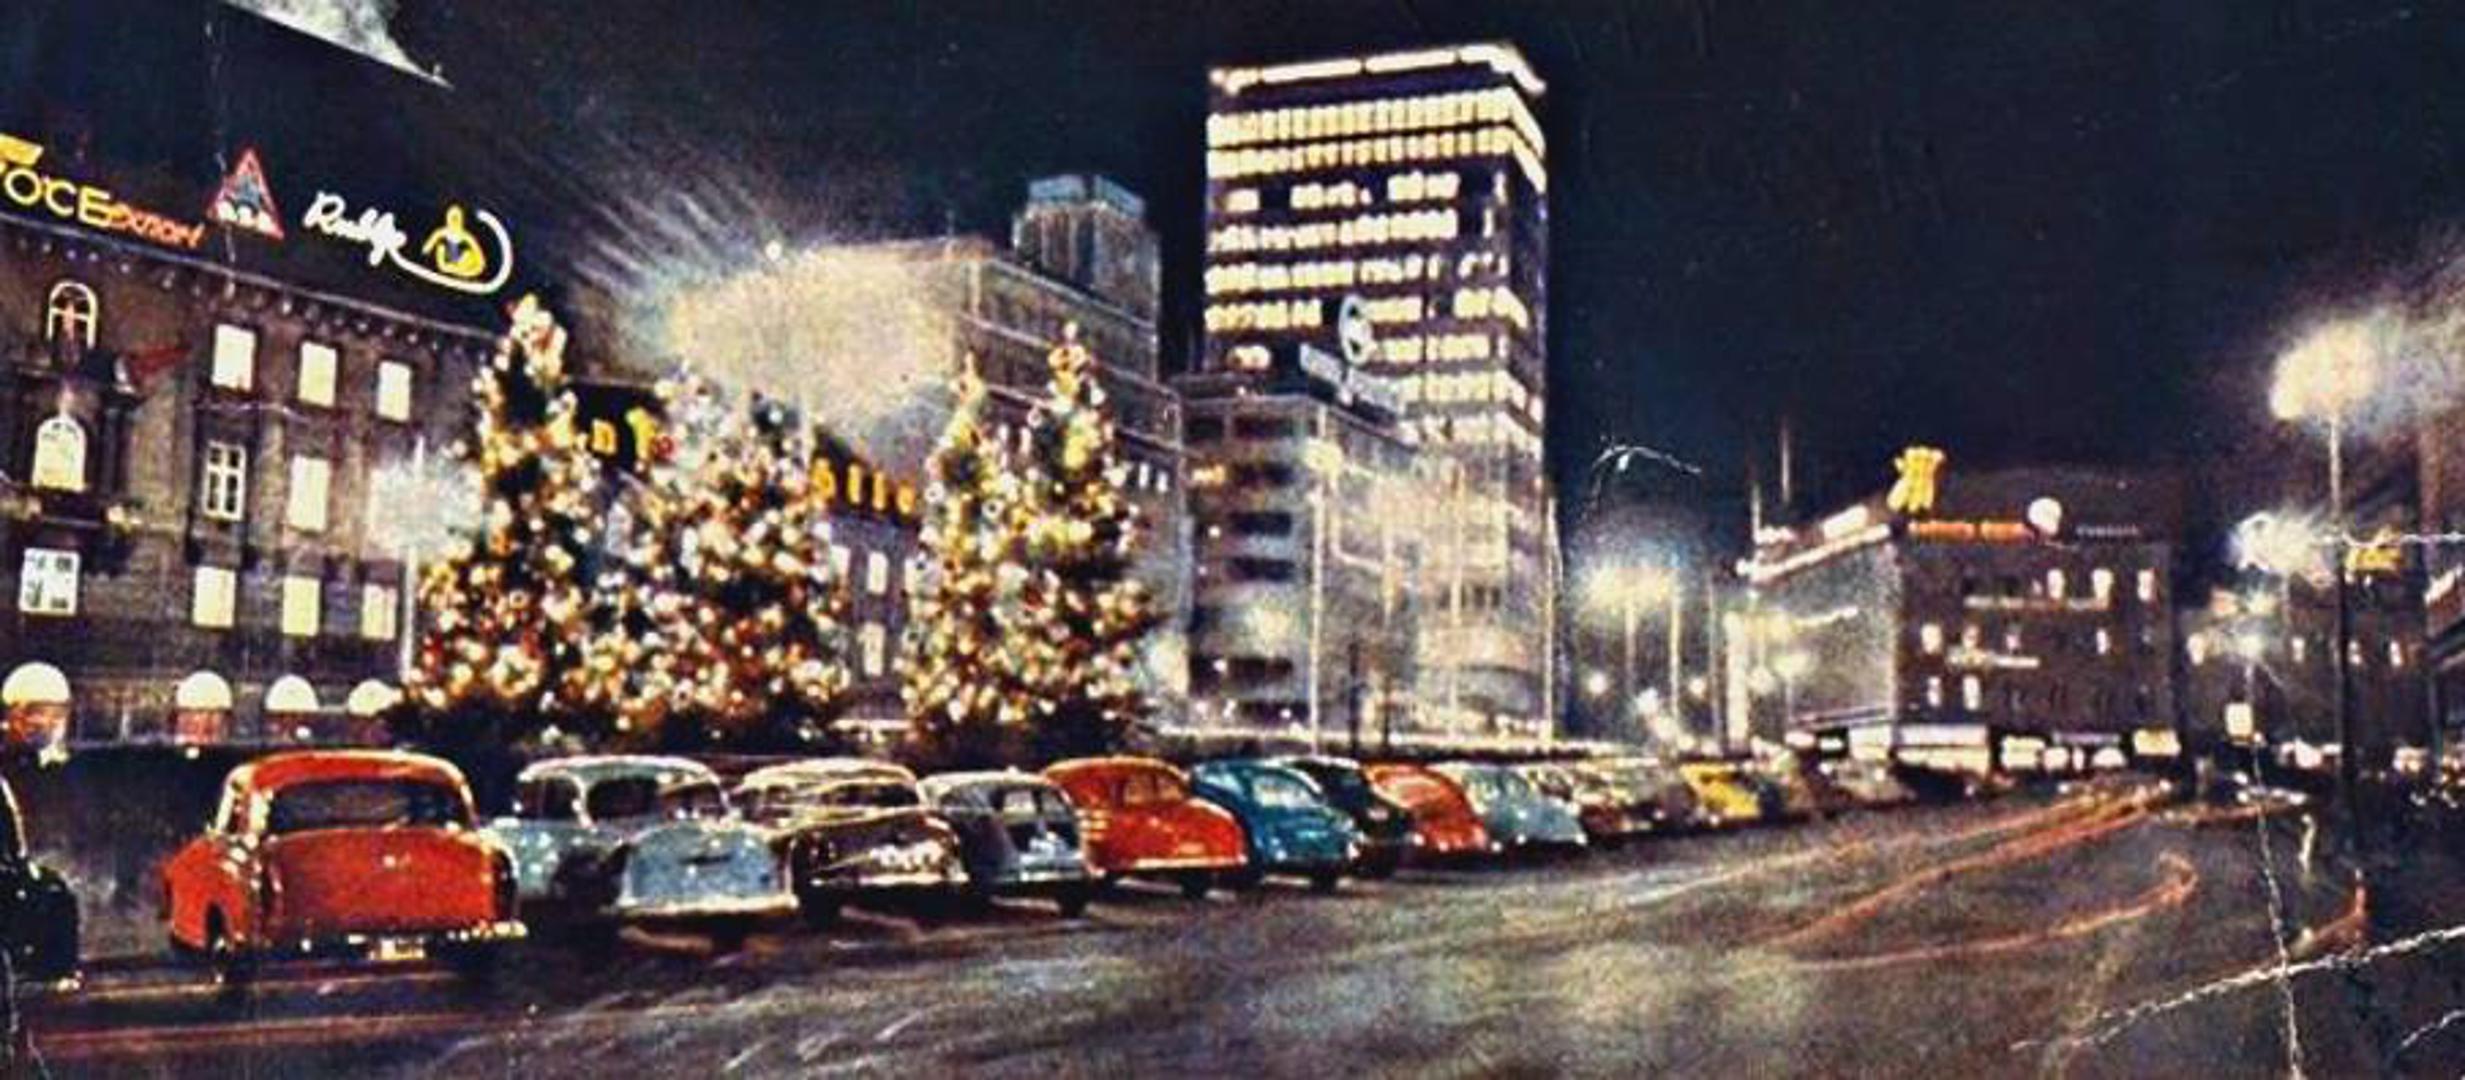 Božić na Trgu Republike, 1965. godine